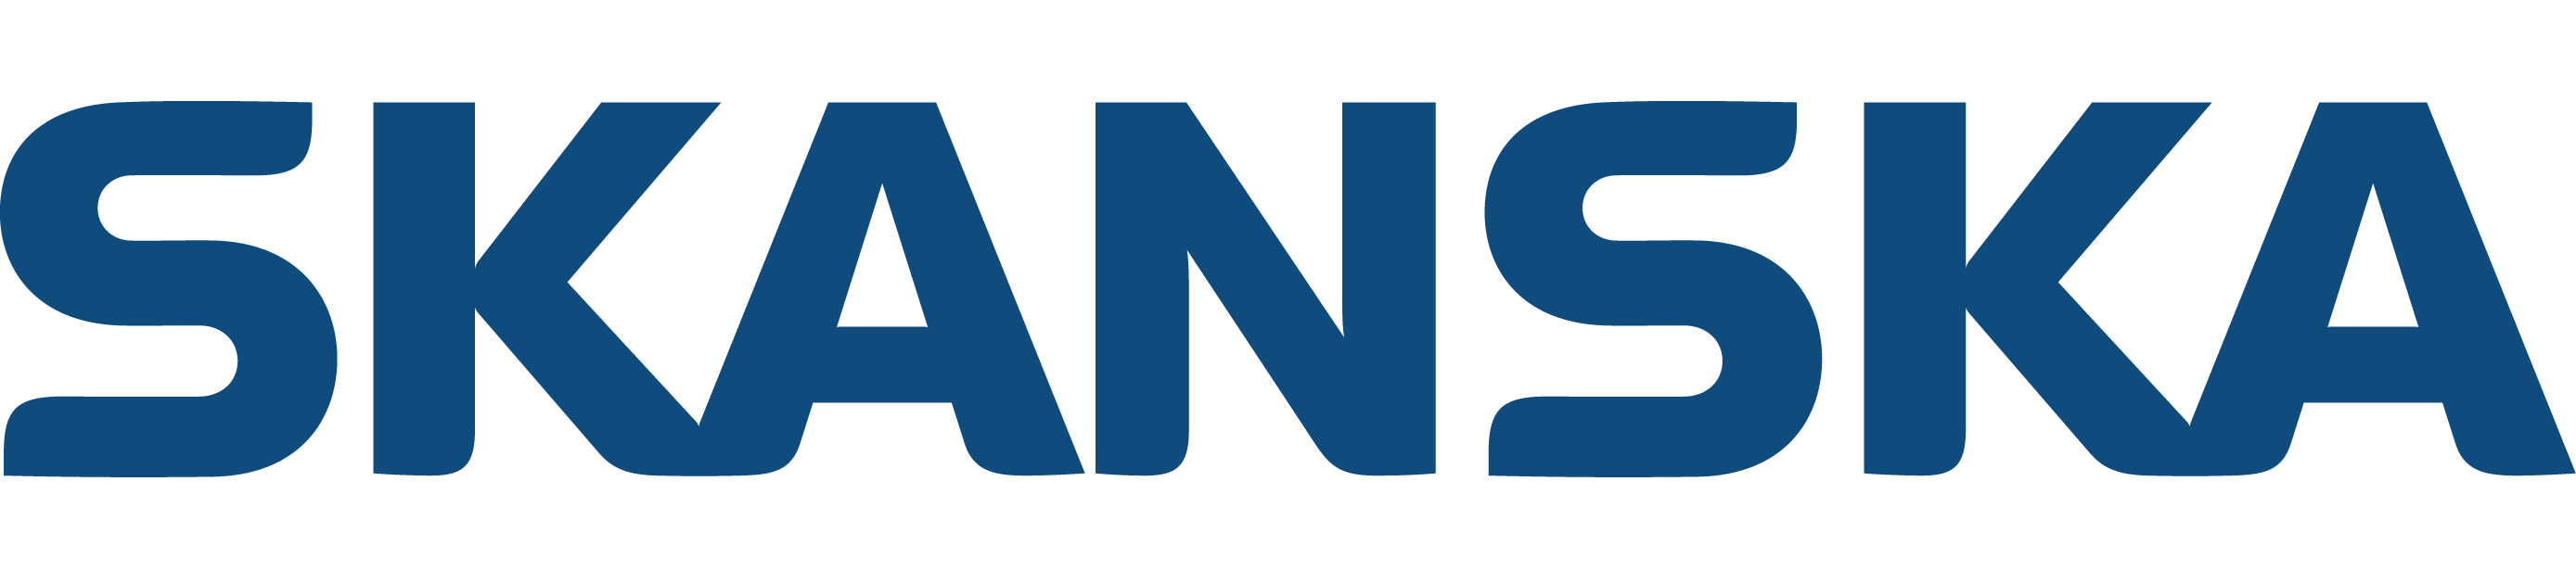 Blue Skanska logo on white background